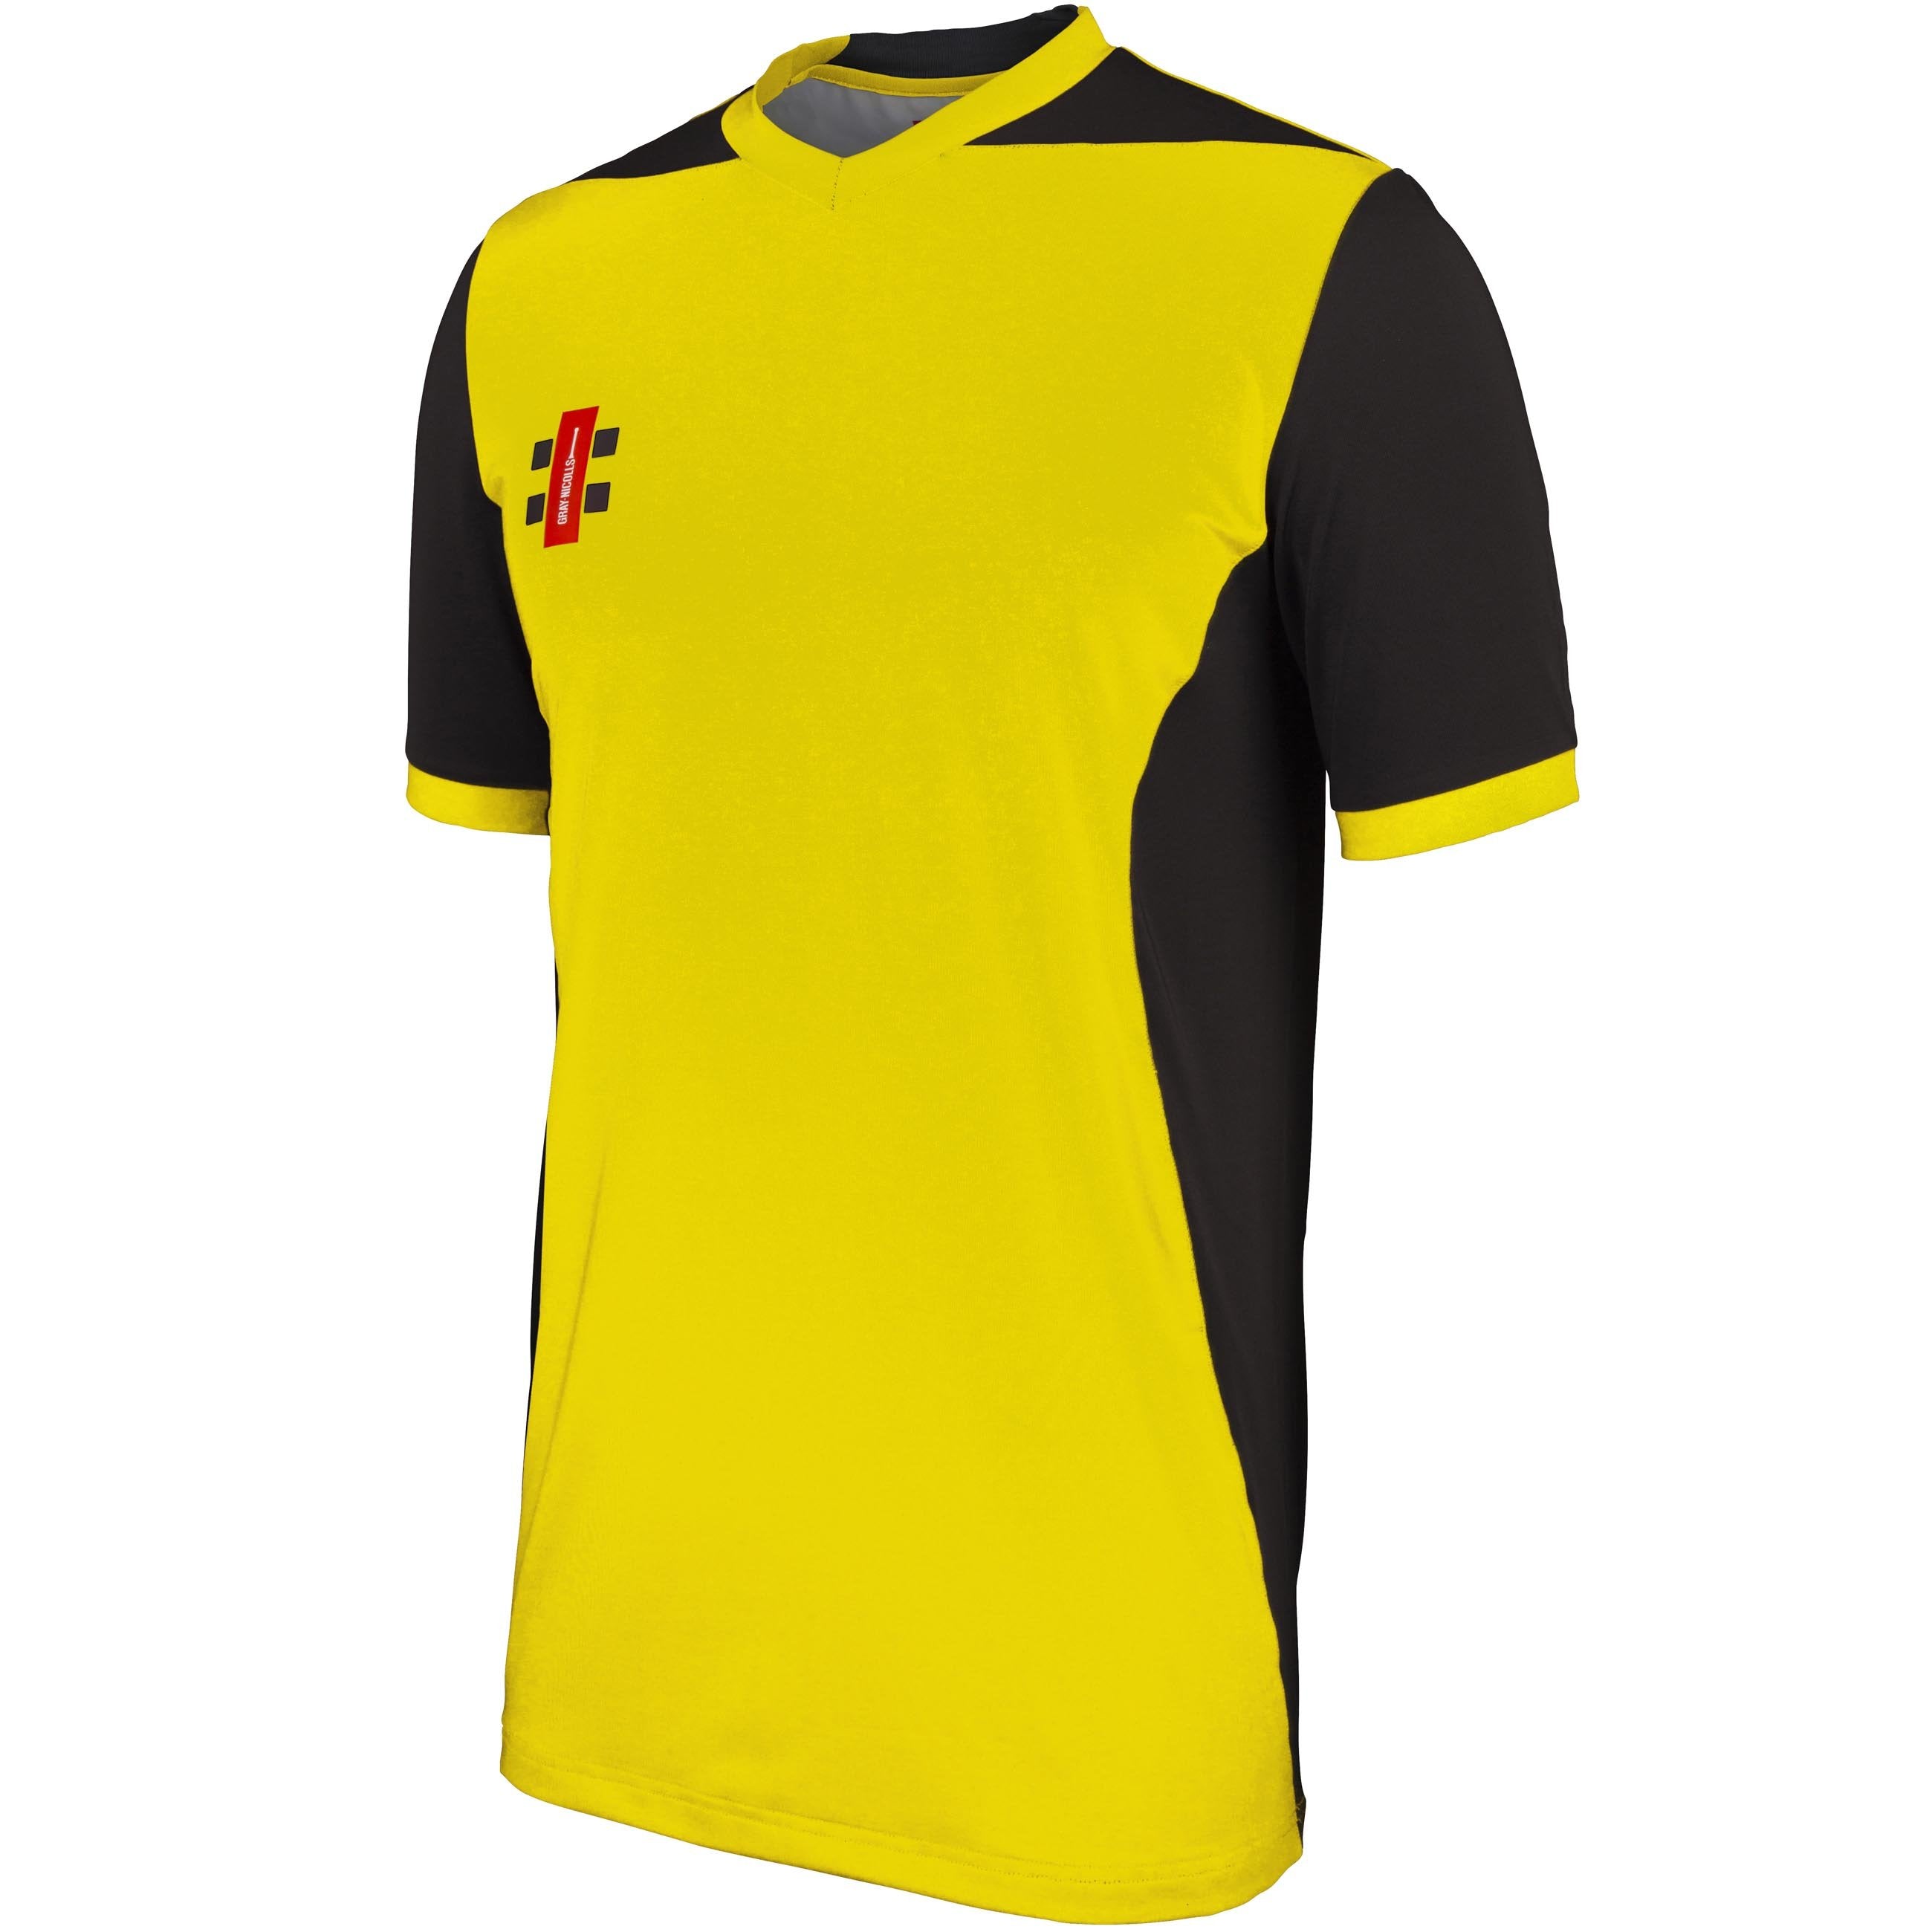 2600 CCFC19 5029205 Shirt T20 Yellow & Black Main